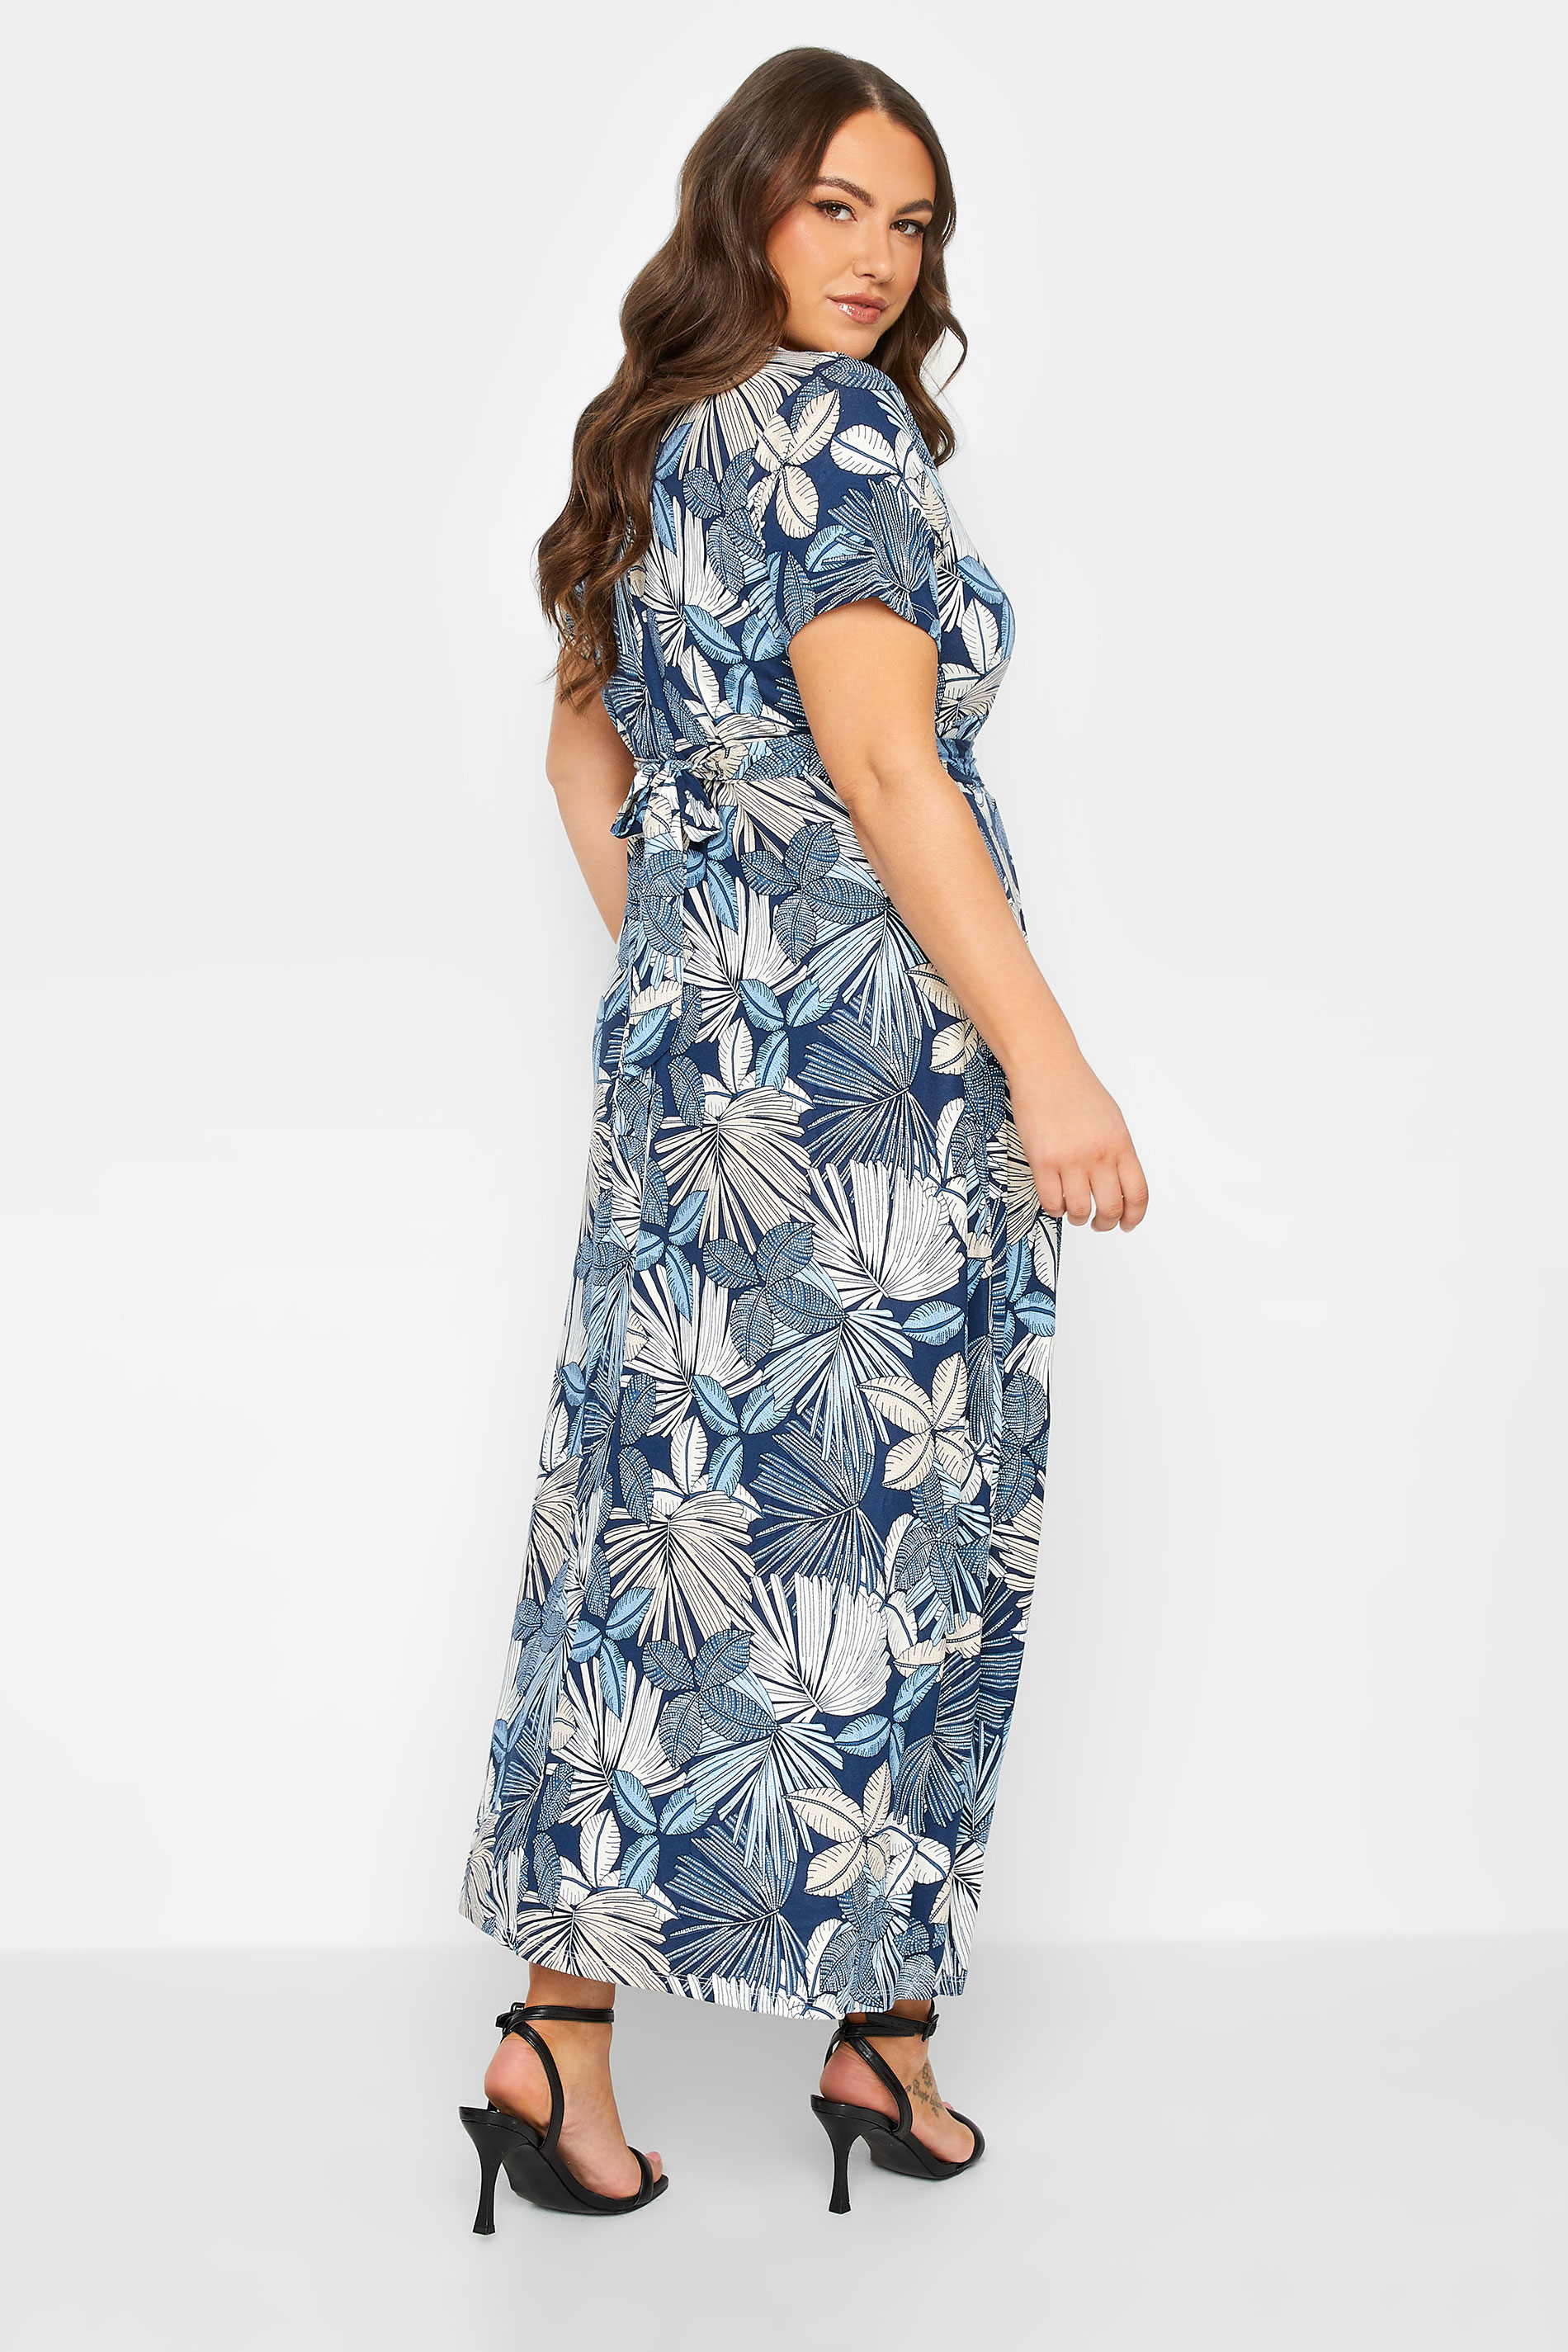 YOURS Plus Size Curve Blue Leaf Print Wrap Dress | Yours Clothing  3